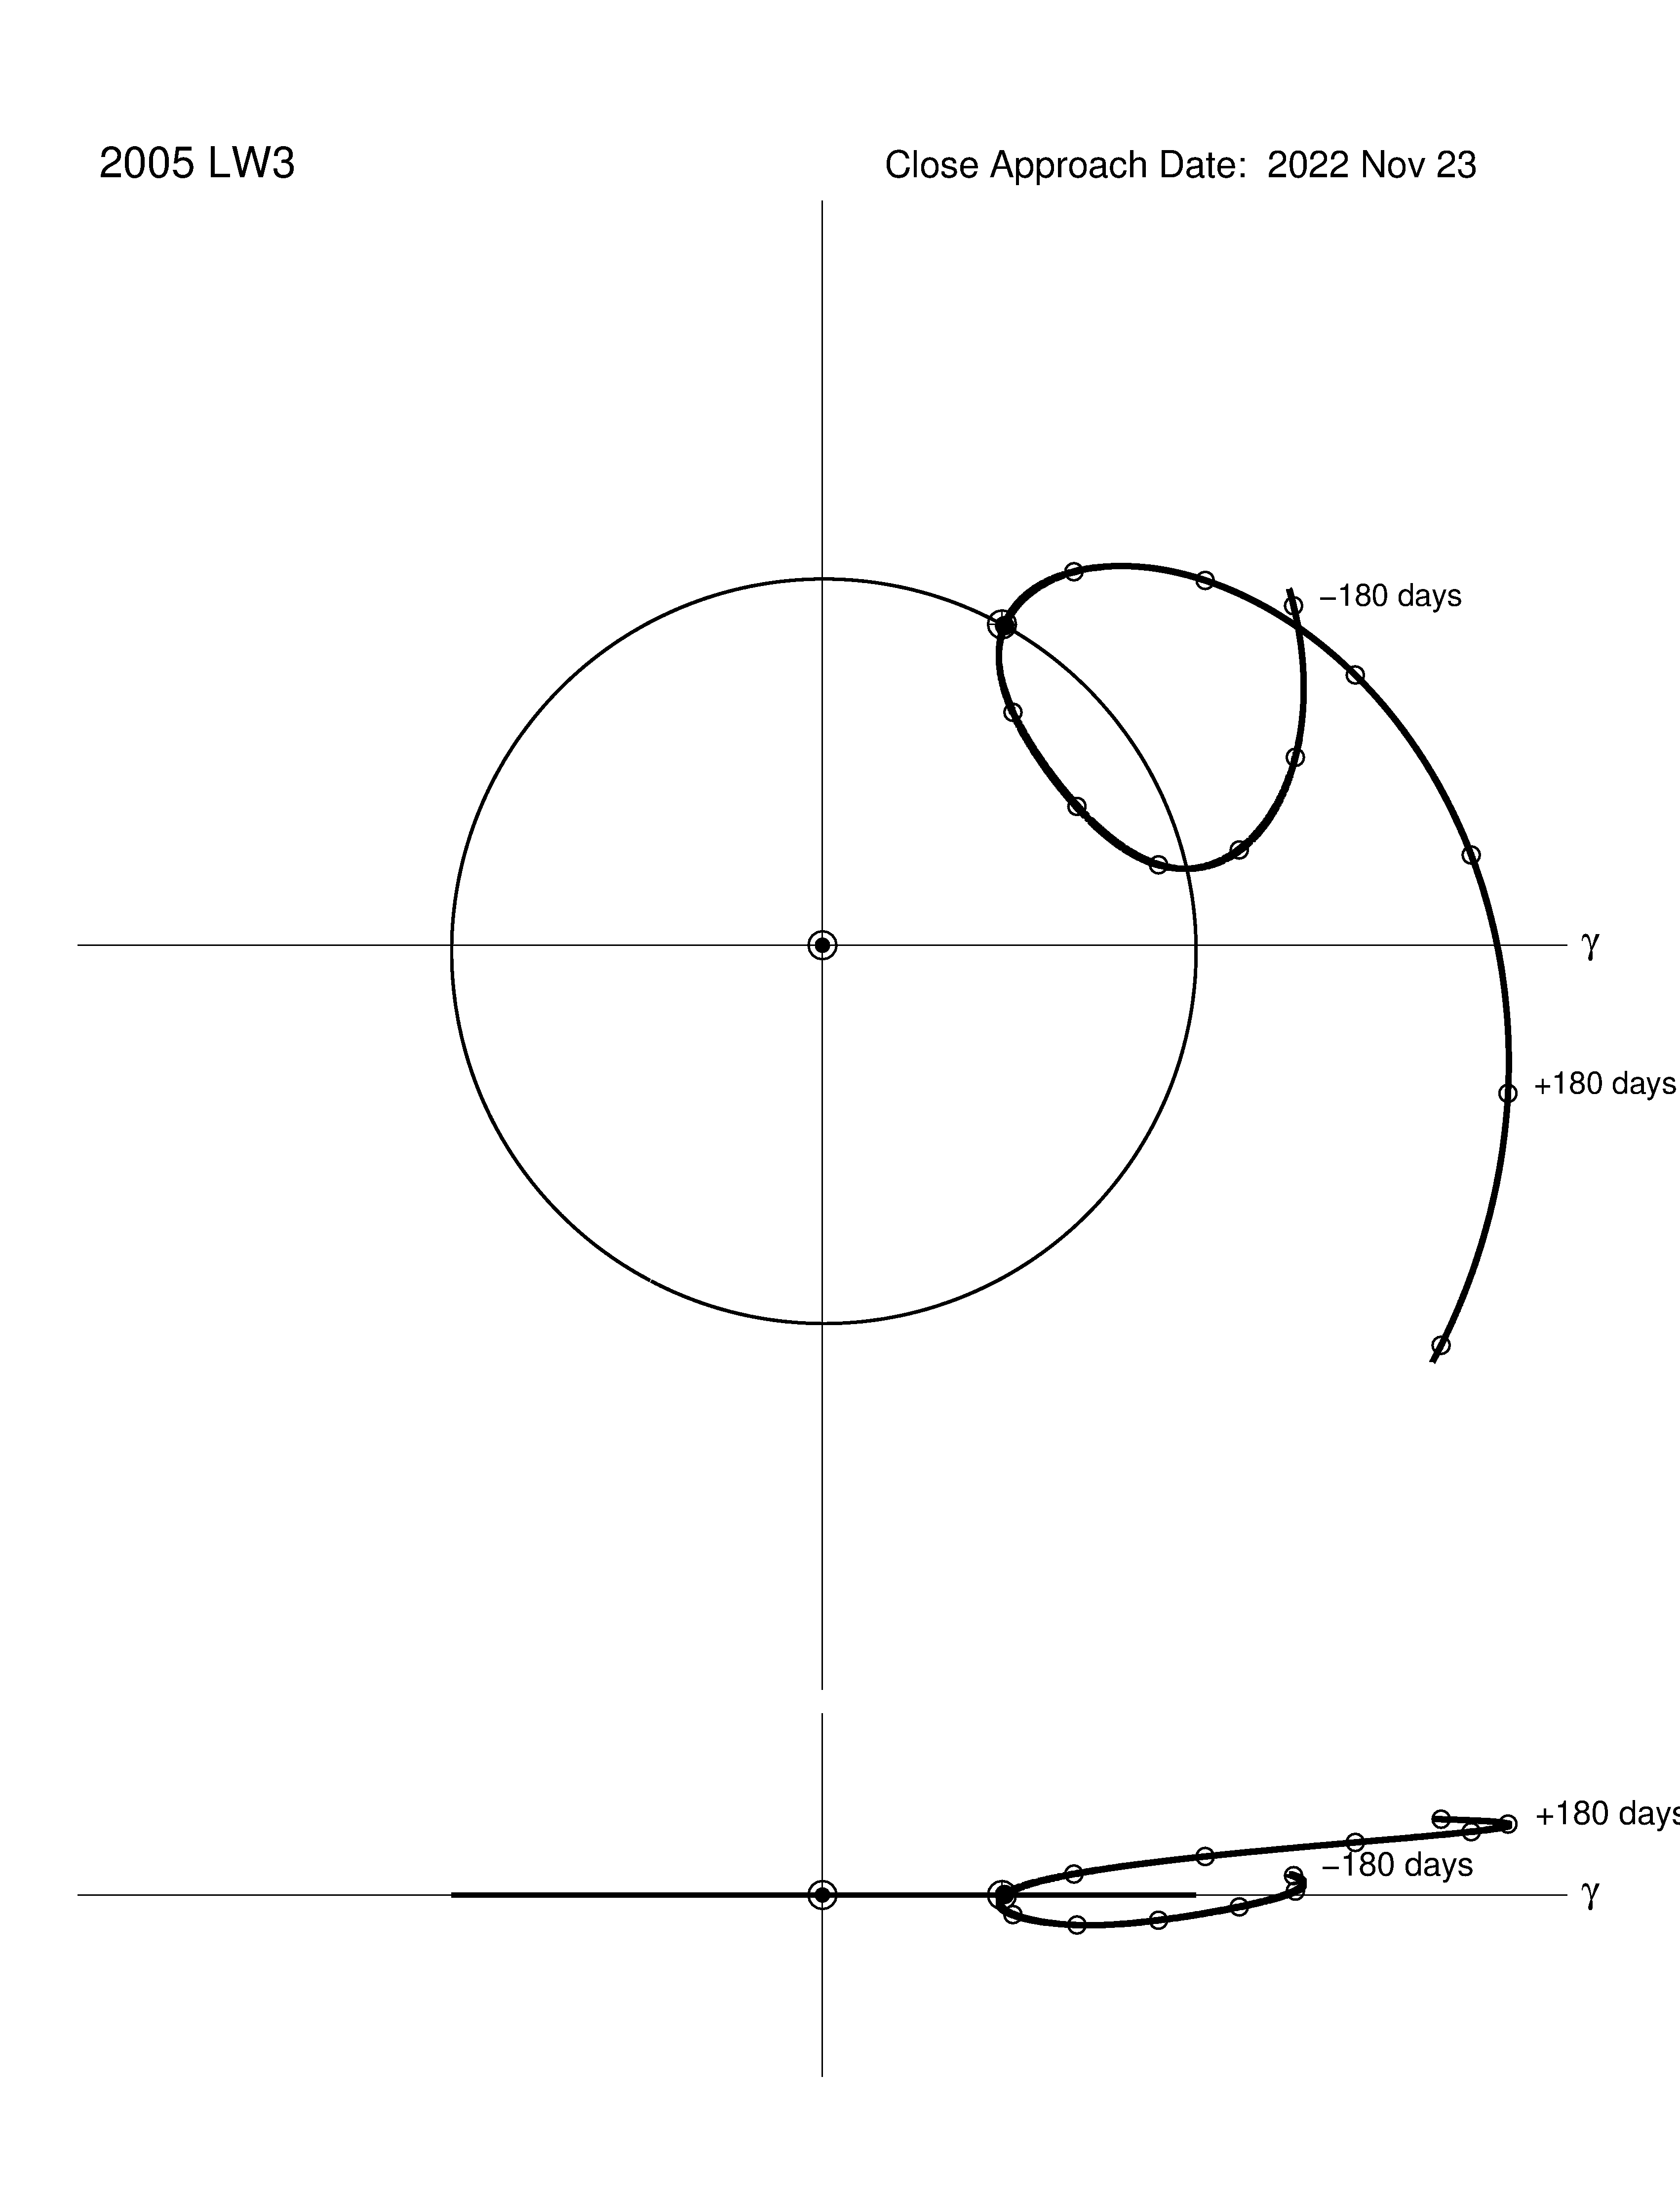 Plot of 2005 LW3' orbit in Earth-co-orbital frame.